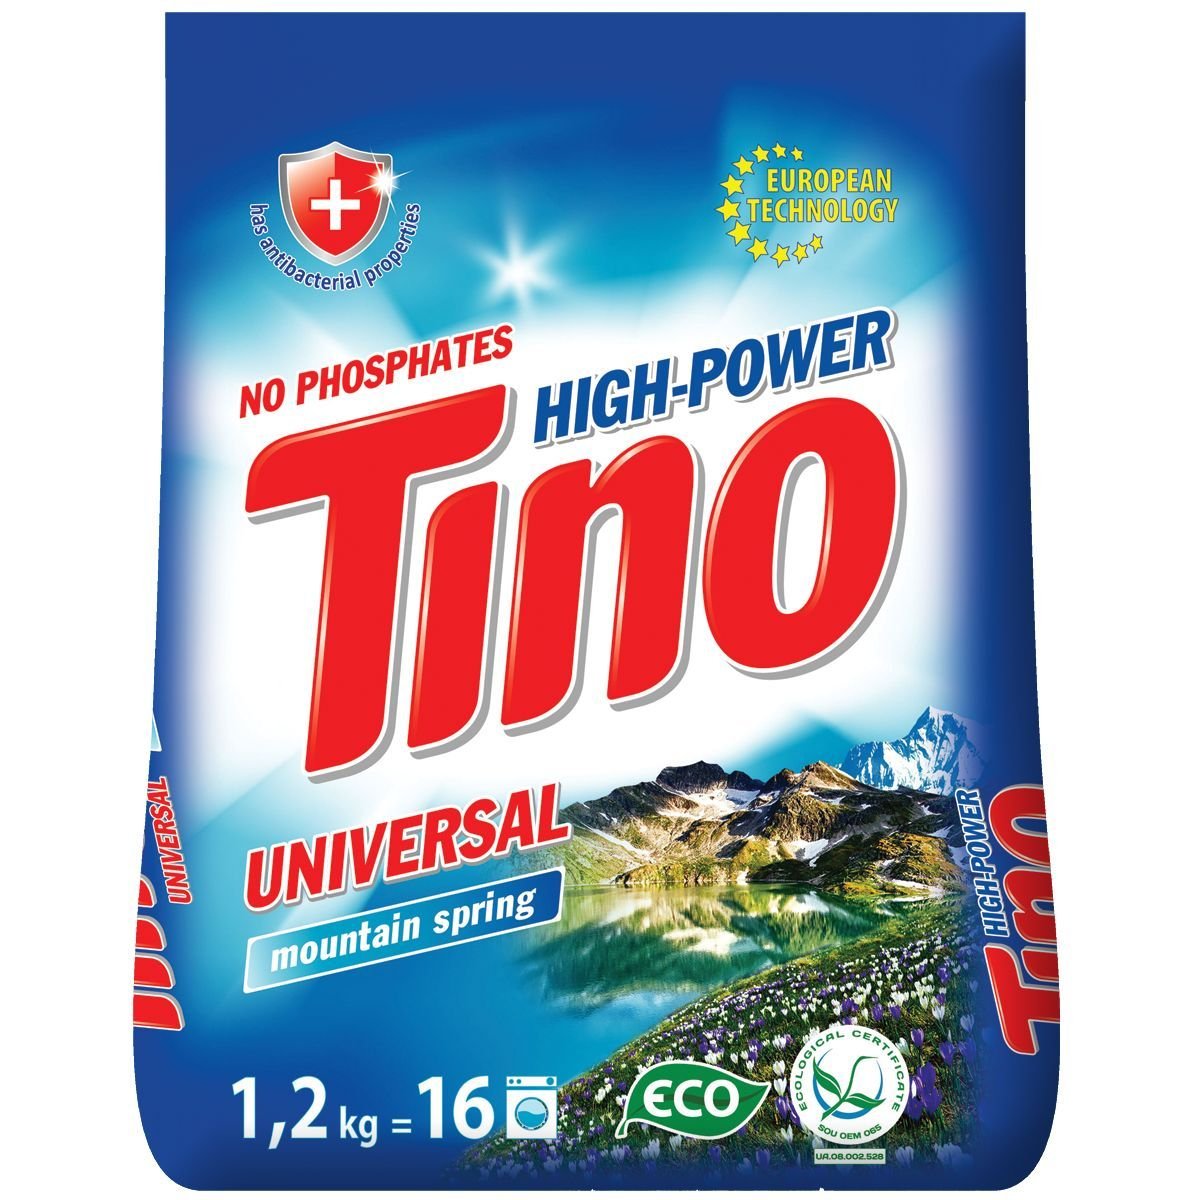 Порошок пральний Tino High-Power Universal Mountain spring, 1,2 кг - фото 1